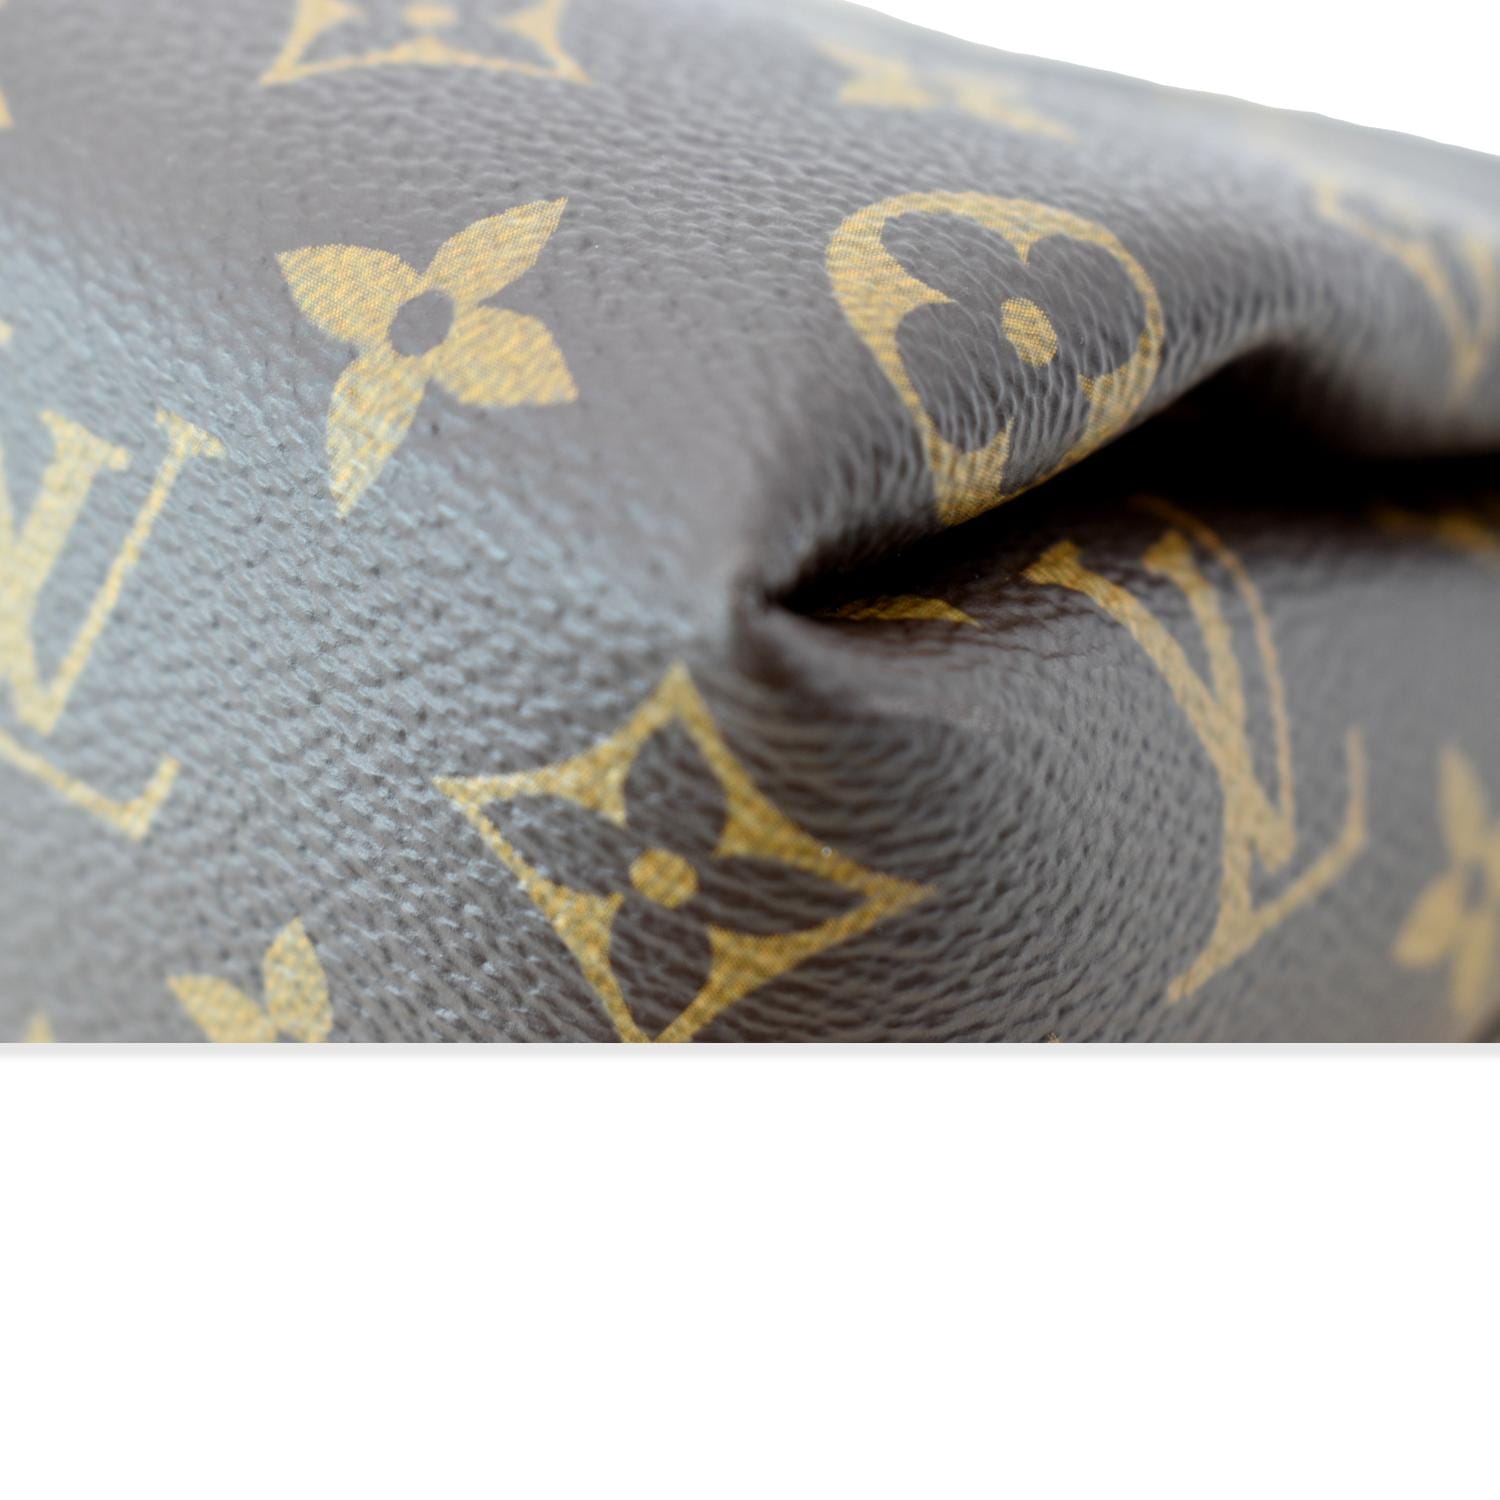 Pallas Beauty Case Monogram – Keeks Designer Handbags